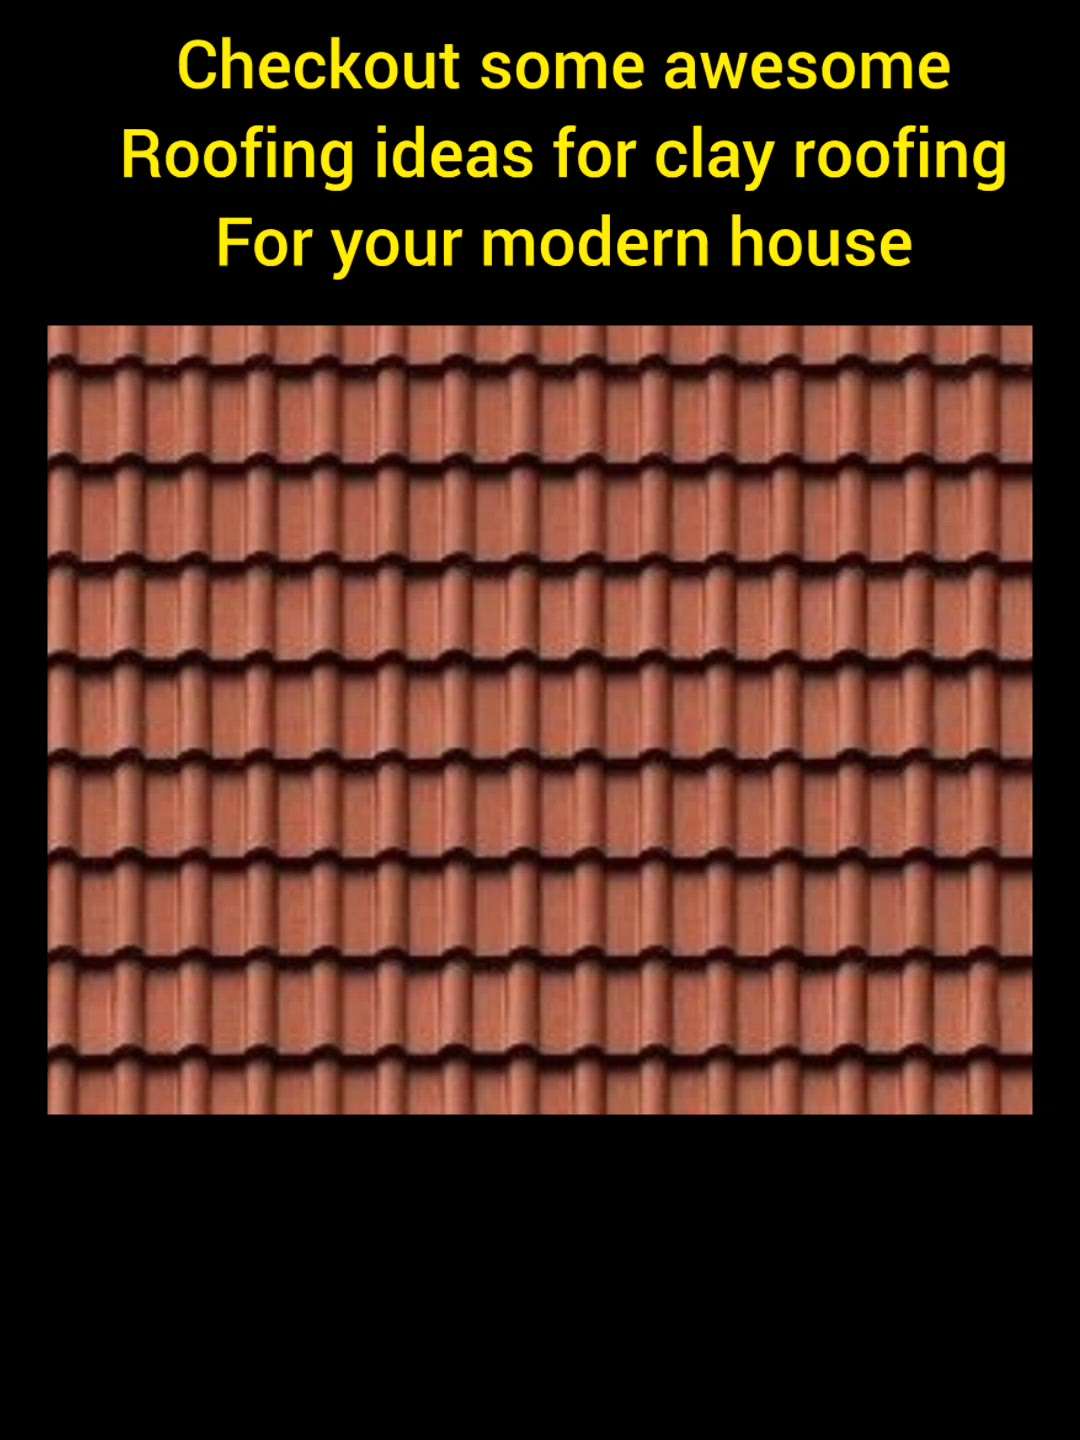 https://koloapp.in/feeds/1663155430?title=KPG
#creatorsofkolo #kerala #KPG #Roofing
roofingsolutions for modern house
#traditionalroofing #TraditionalHouse #modernhouse #claytiles #claytilesroofing